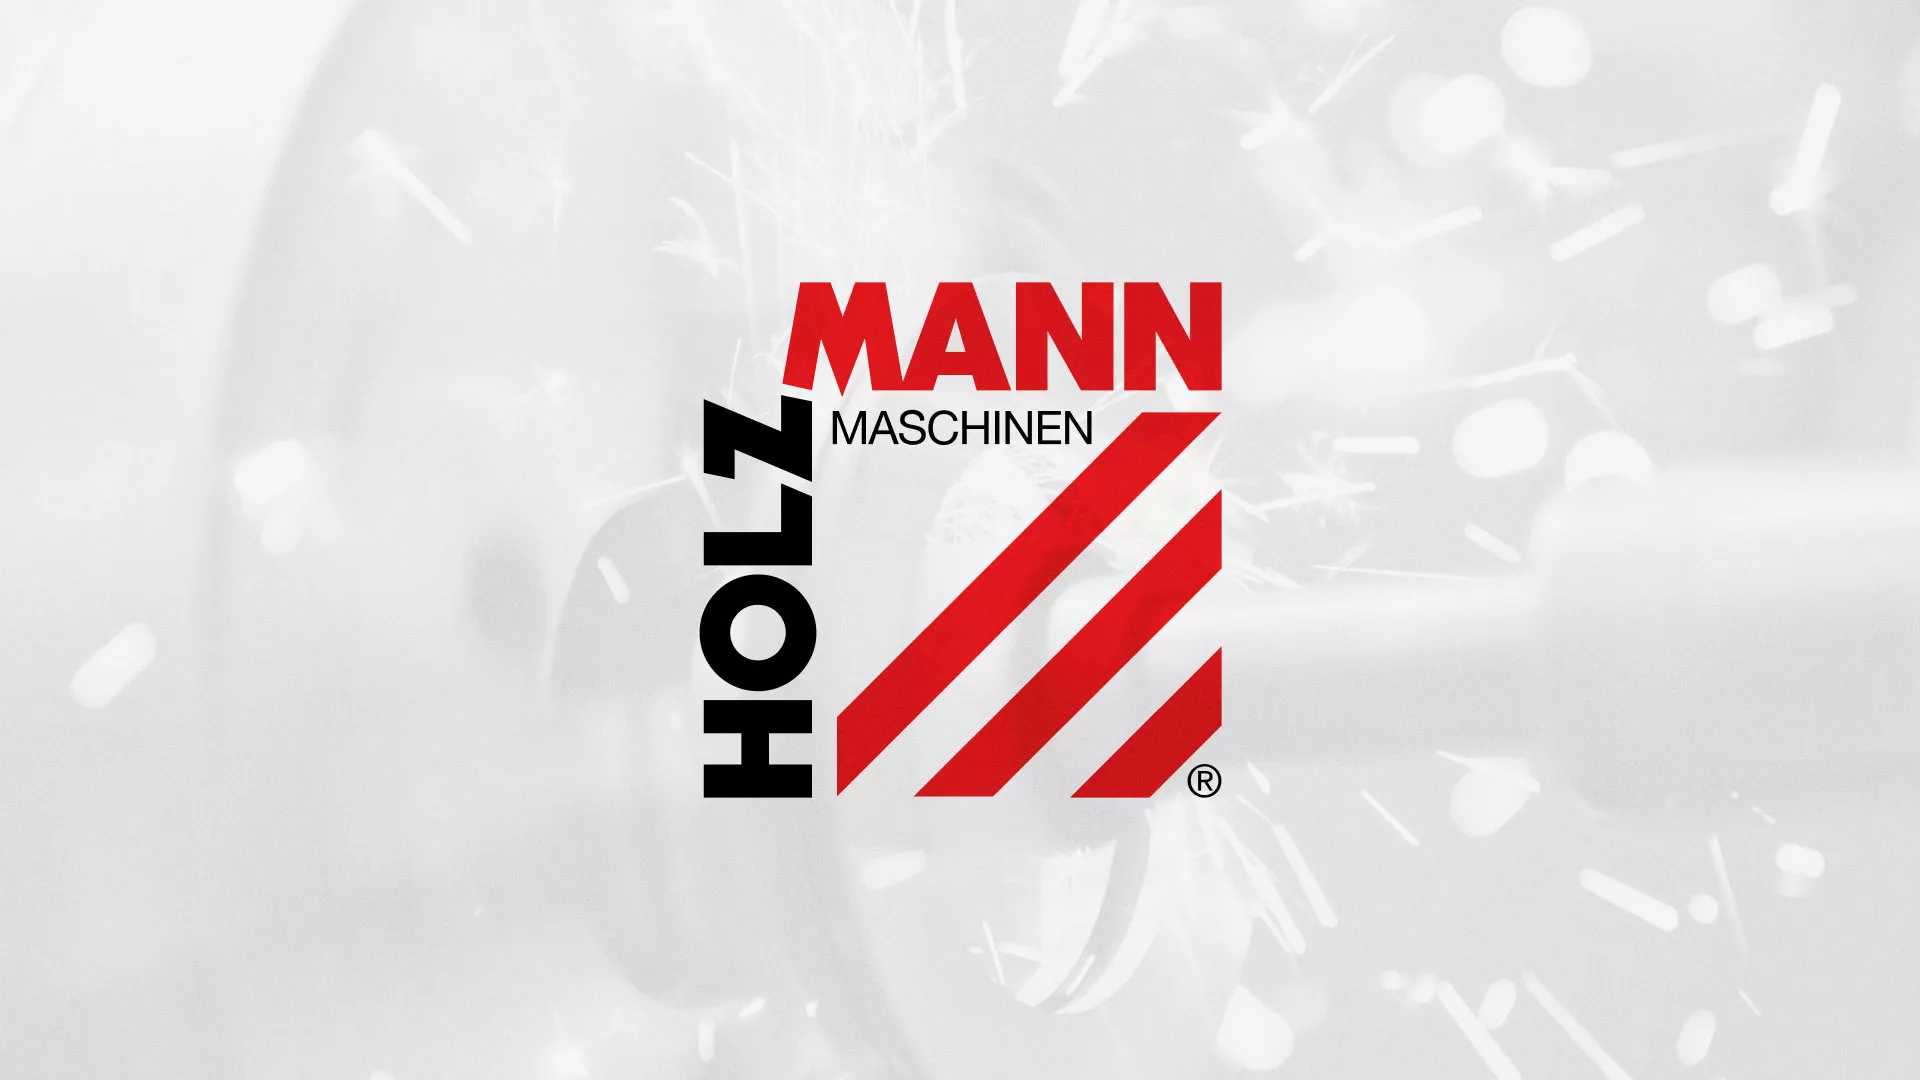 Создание сайта компании «HOLZMANN Maschinen GmbH» в Юхнове